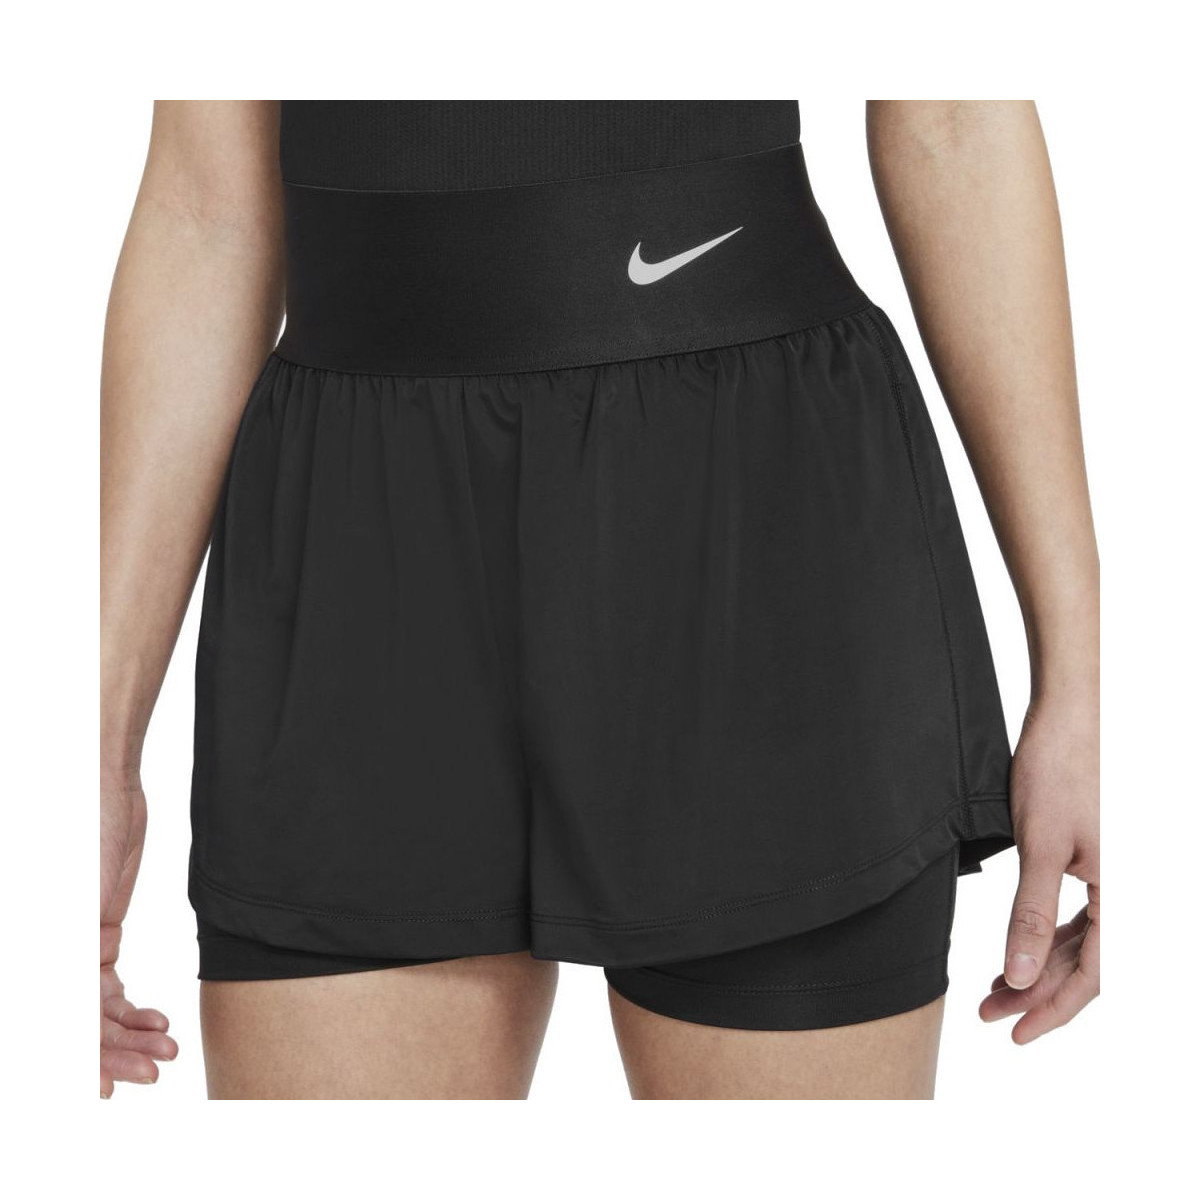 Vêtements Femme Shorts / Bermudas Nike CV4792-011 Noir